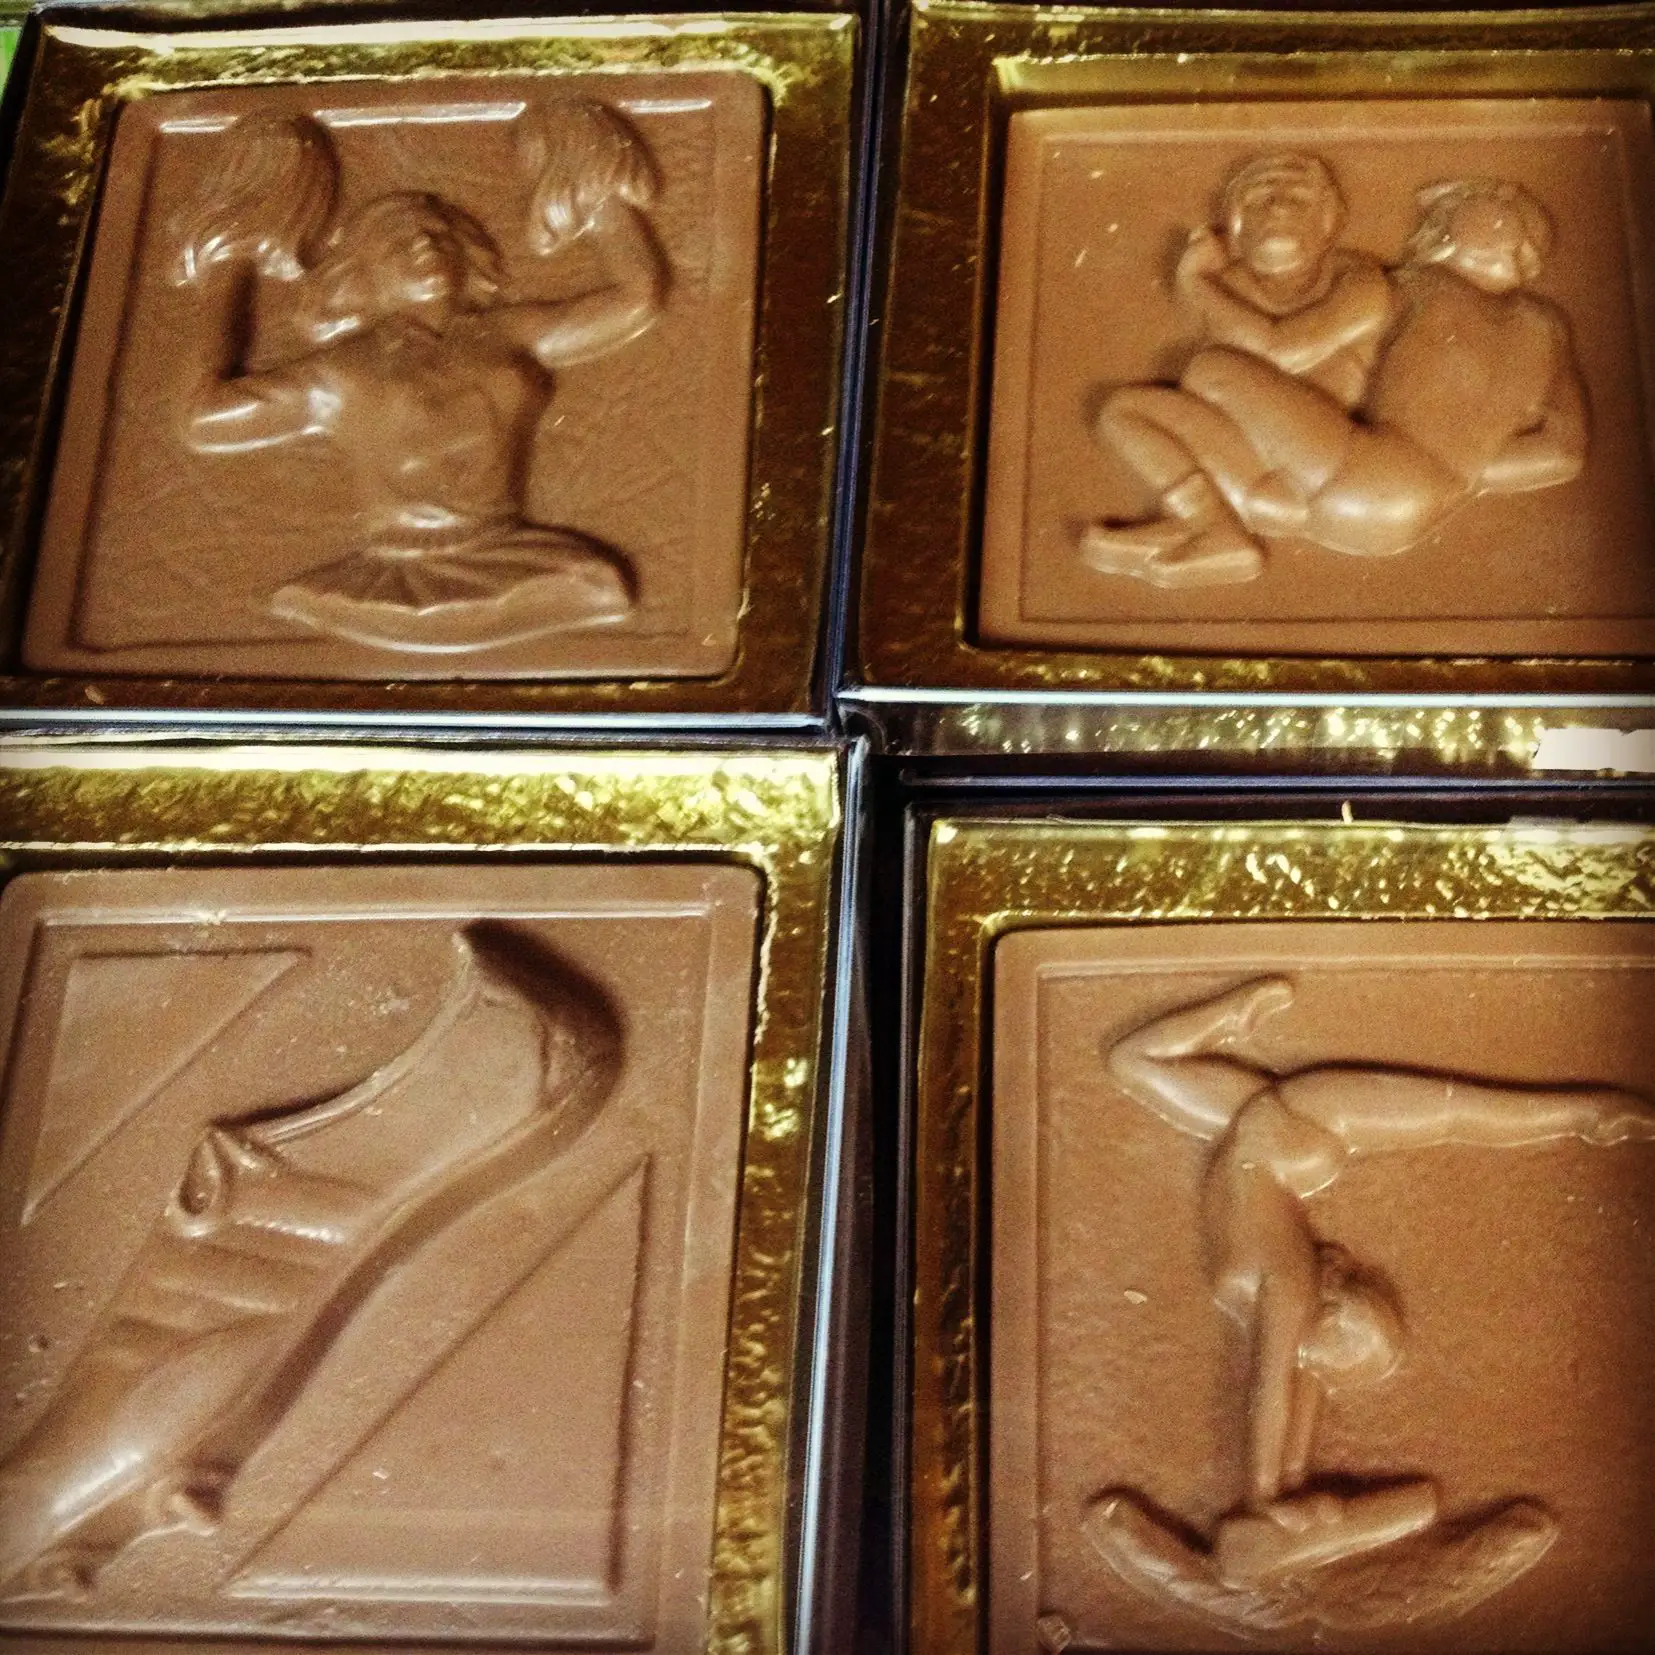 Our custom #chocolate molds